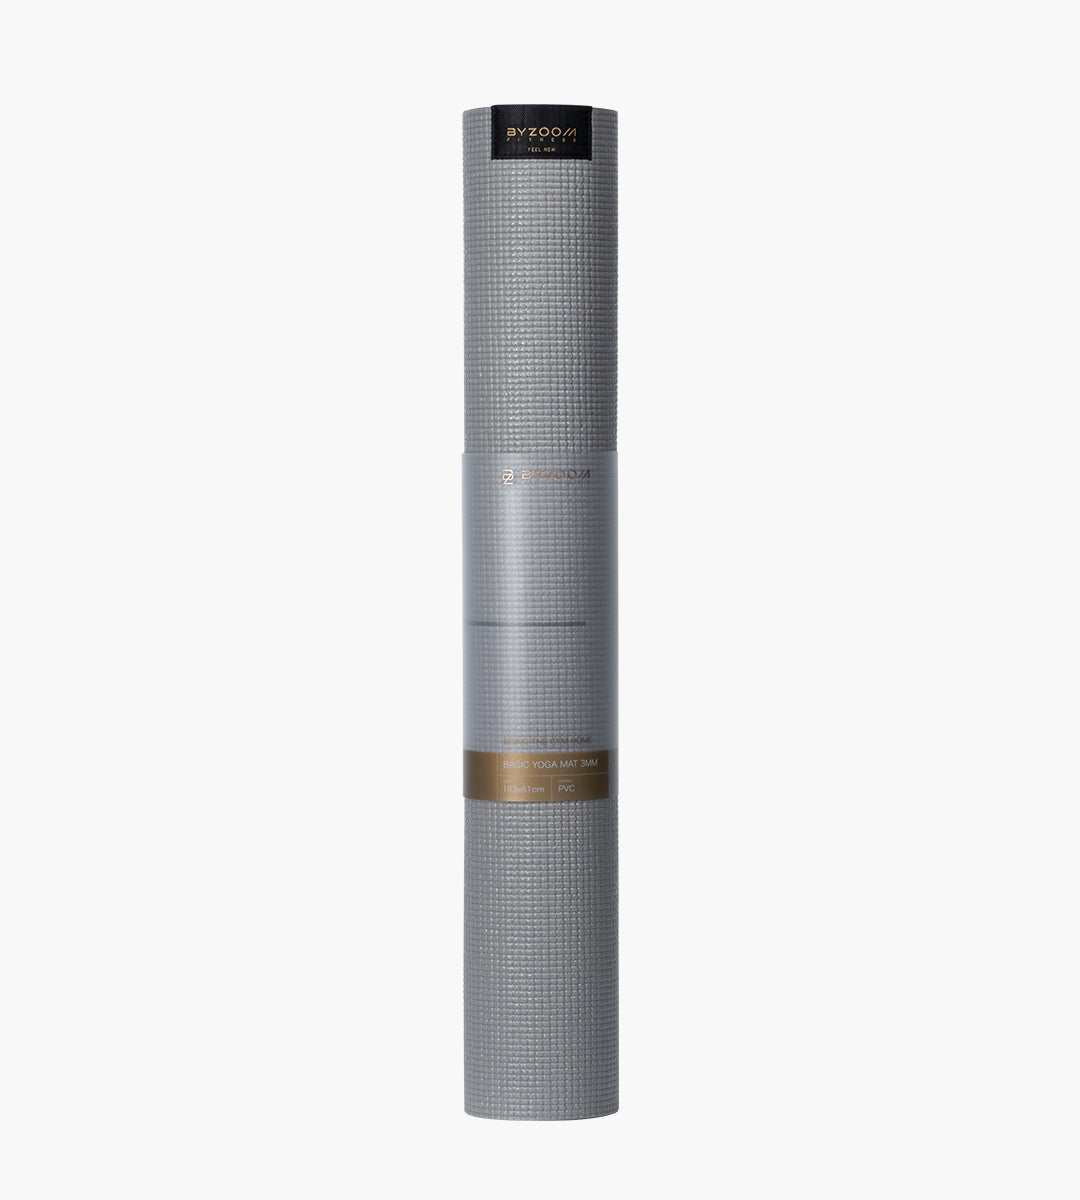 PVC Yoga Mat 3mm (Gray) 